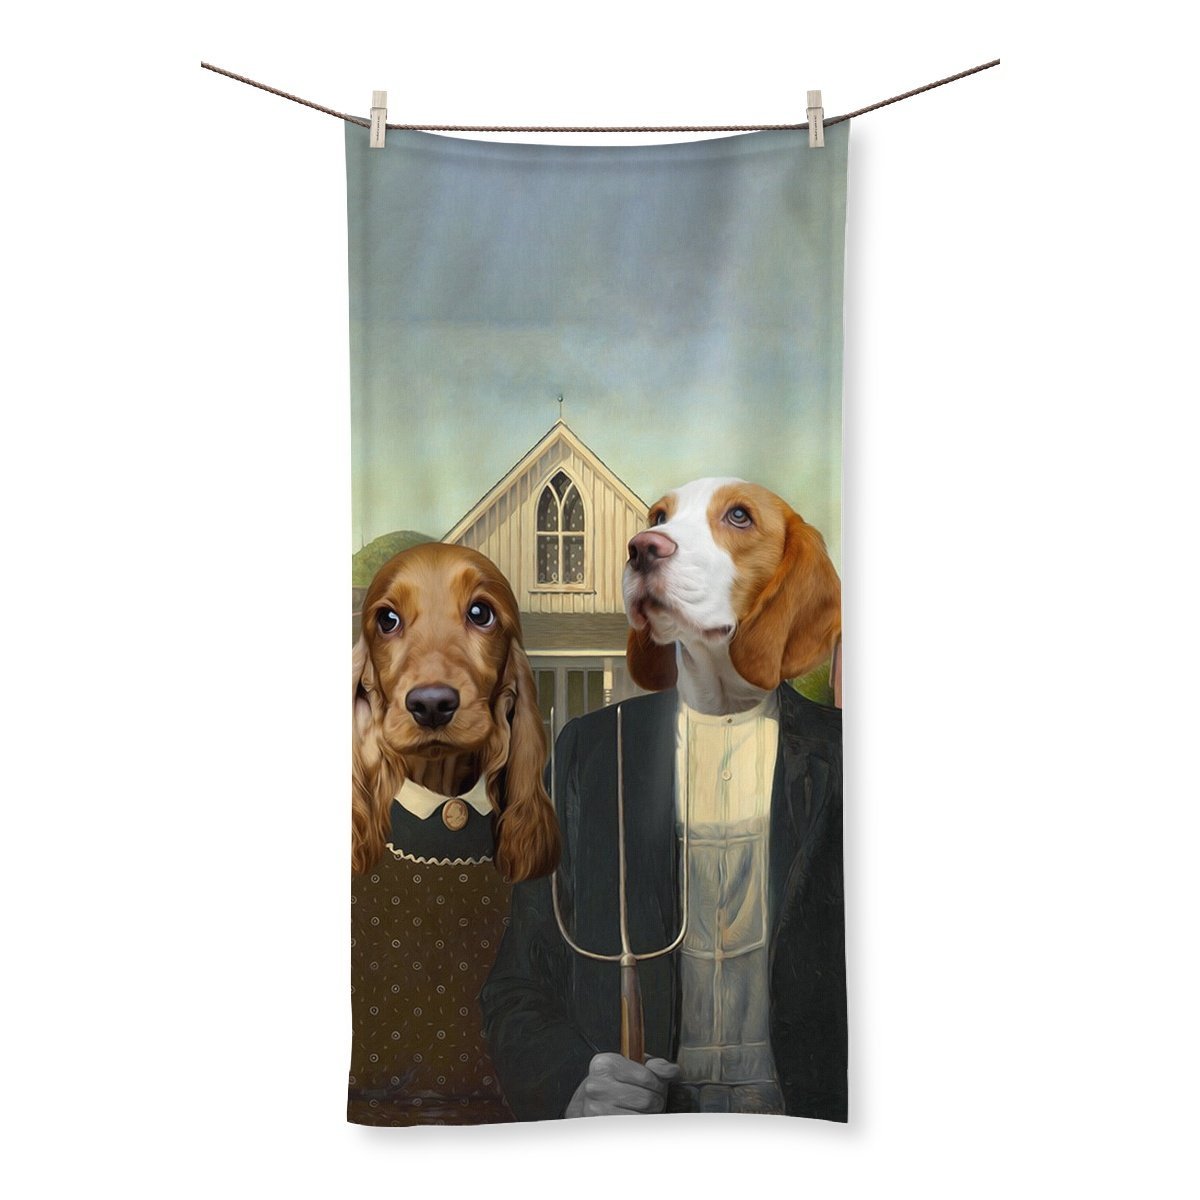 American Gothic: Custom Pet Towel - Paw & Glory: pet portrait towel, pets face on a towel, custom pet towel, custom pet portrait towel, personalized pet portrait towel, personalised pet portrait towel